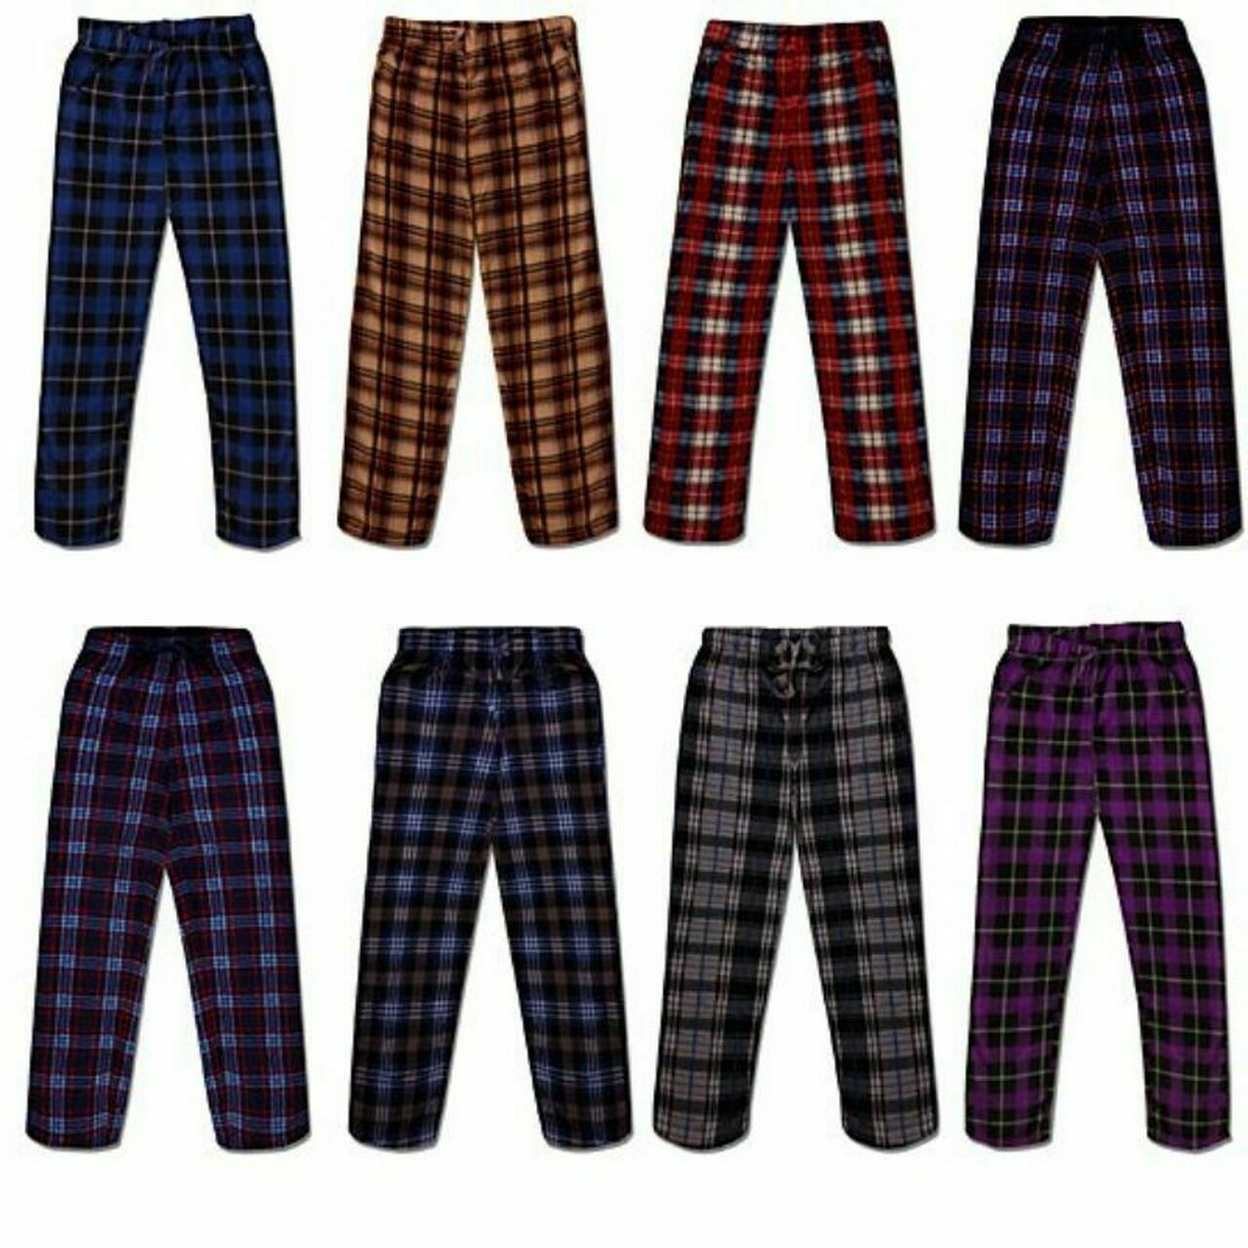 2-Pack: Men's Ultra Soft Cozy Flannel Fleece Plaid Pajama Sleep Bottom Lounge Pants - Black & Black, Large